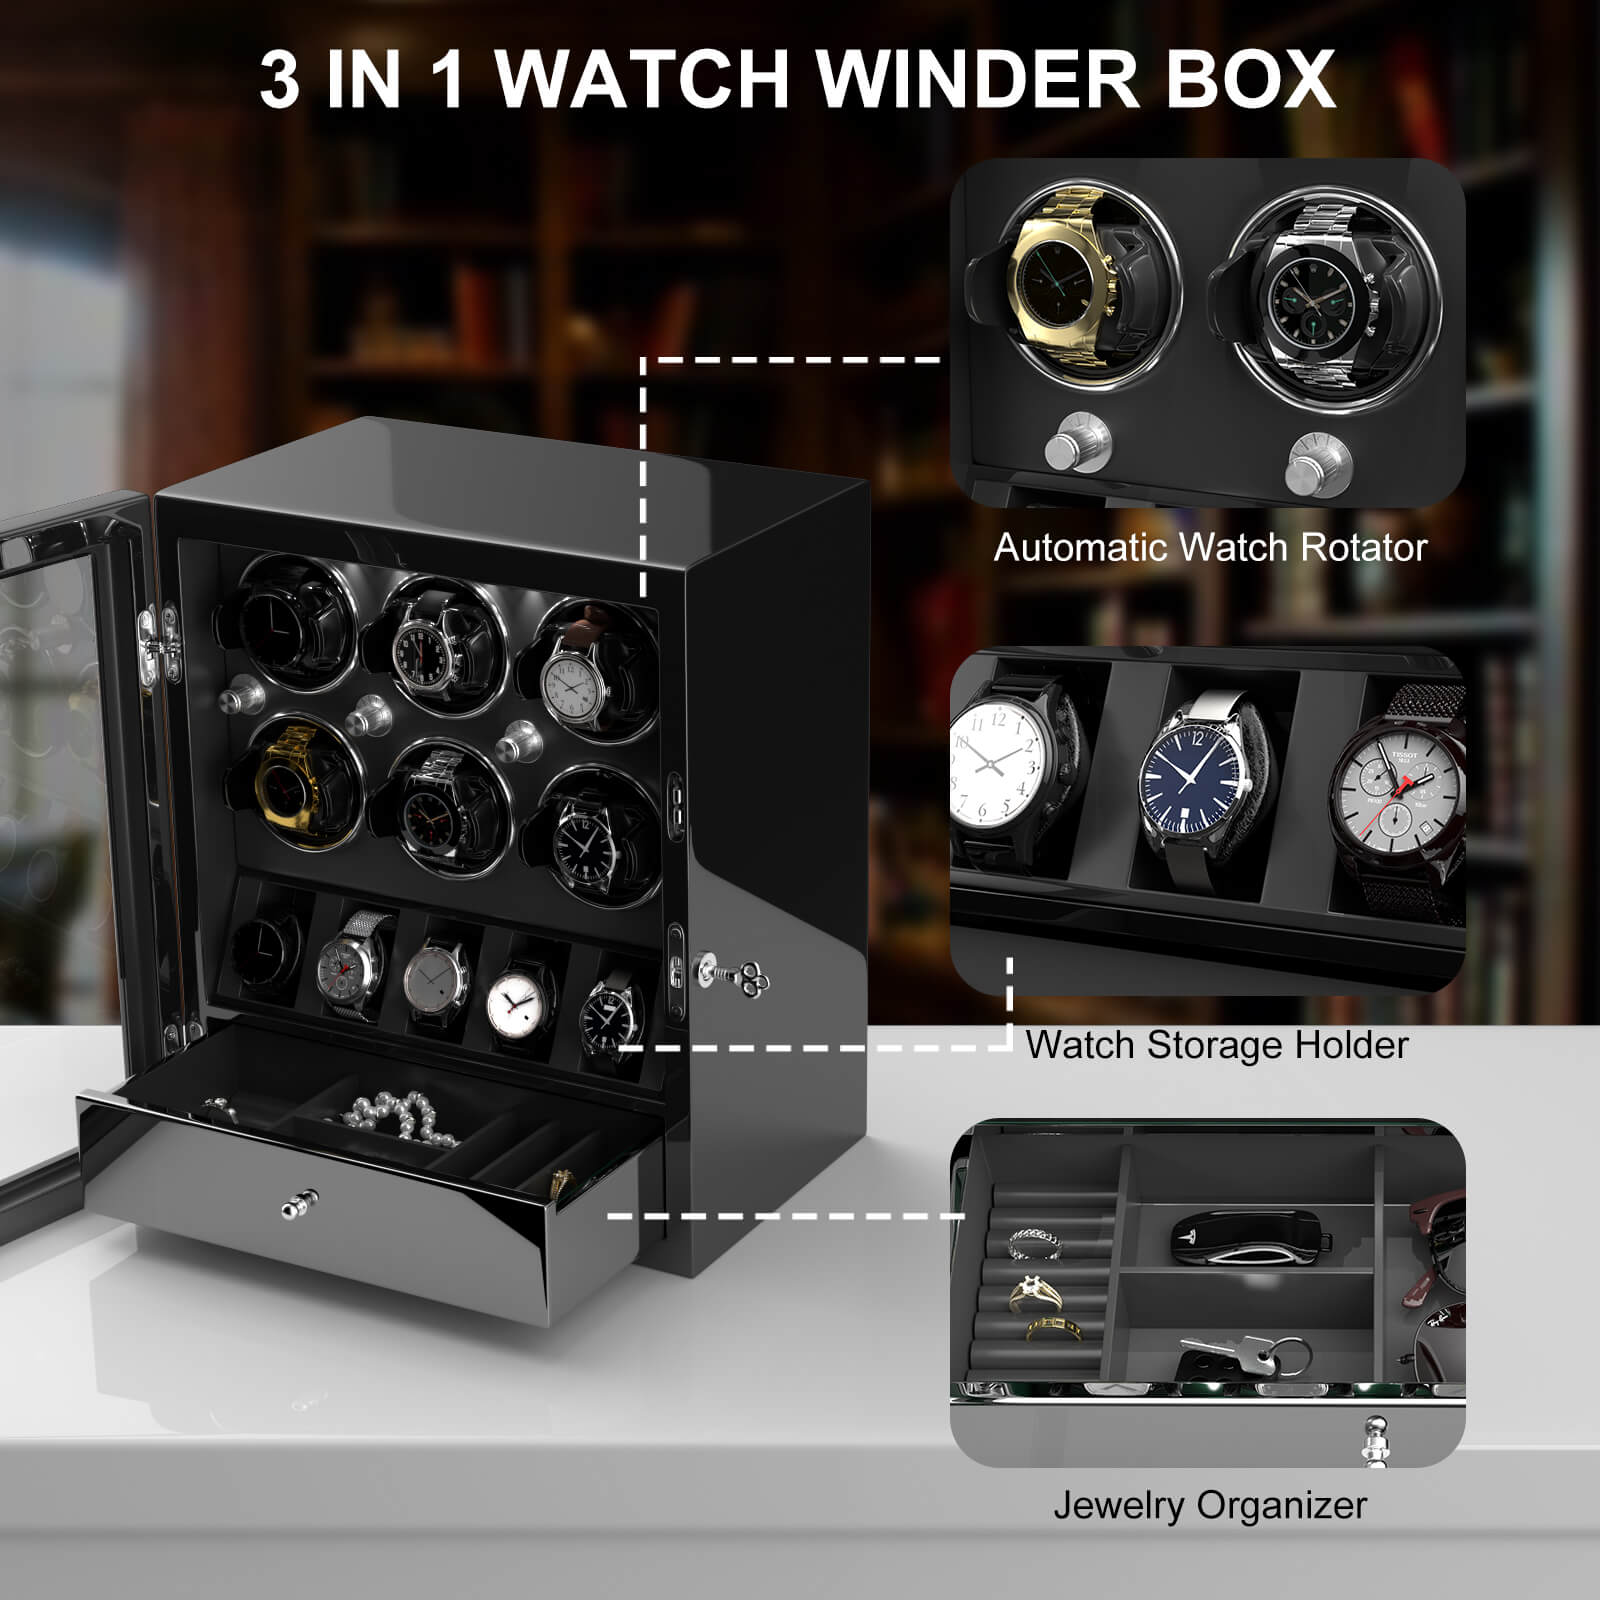 Compact 6 Watch Winders with 5 Watches Organizer Storage Space Quiet Mabuchi Motor - Black